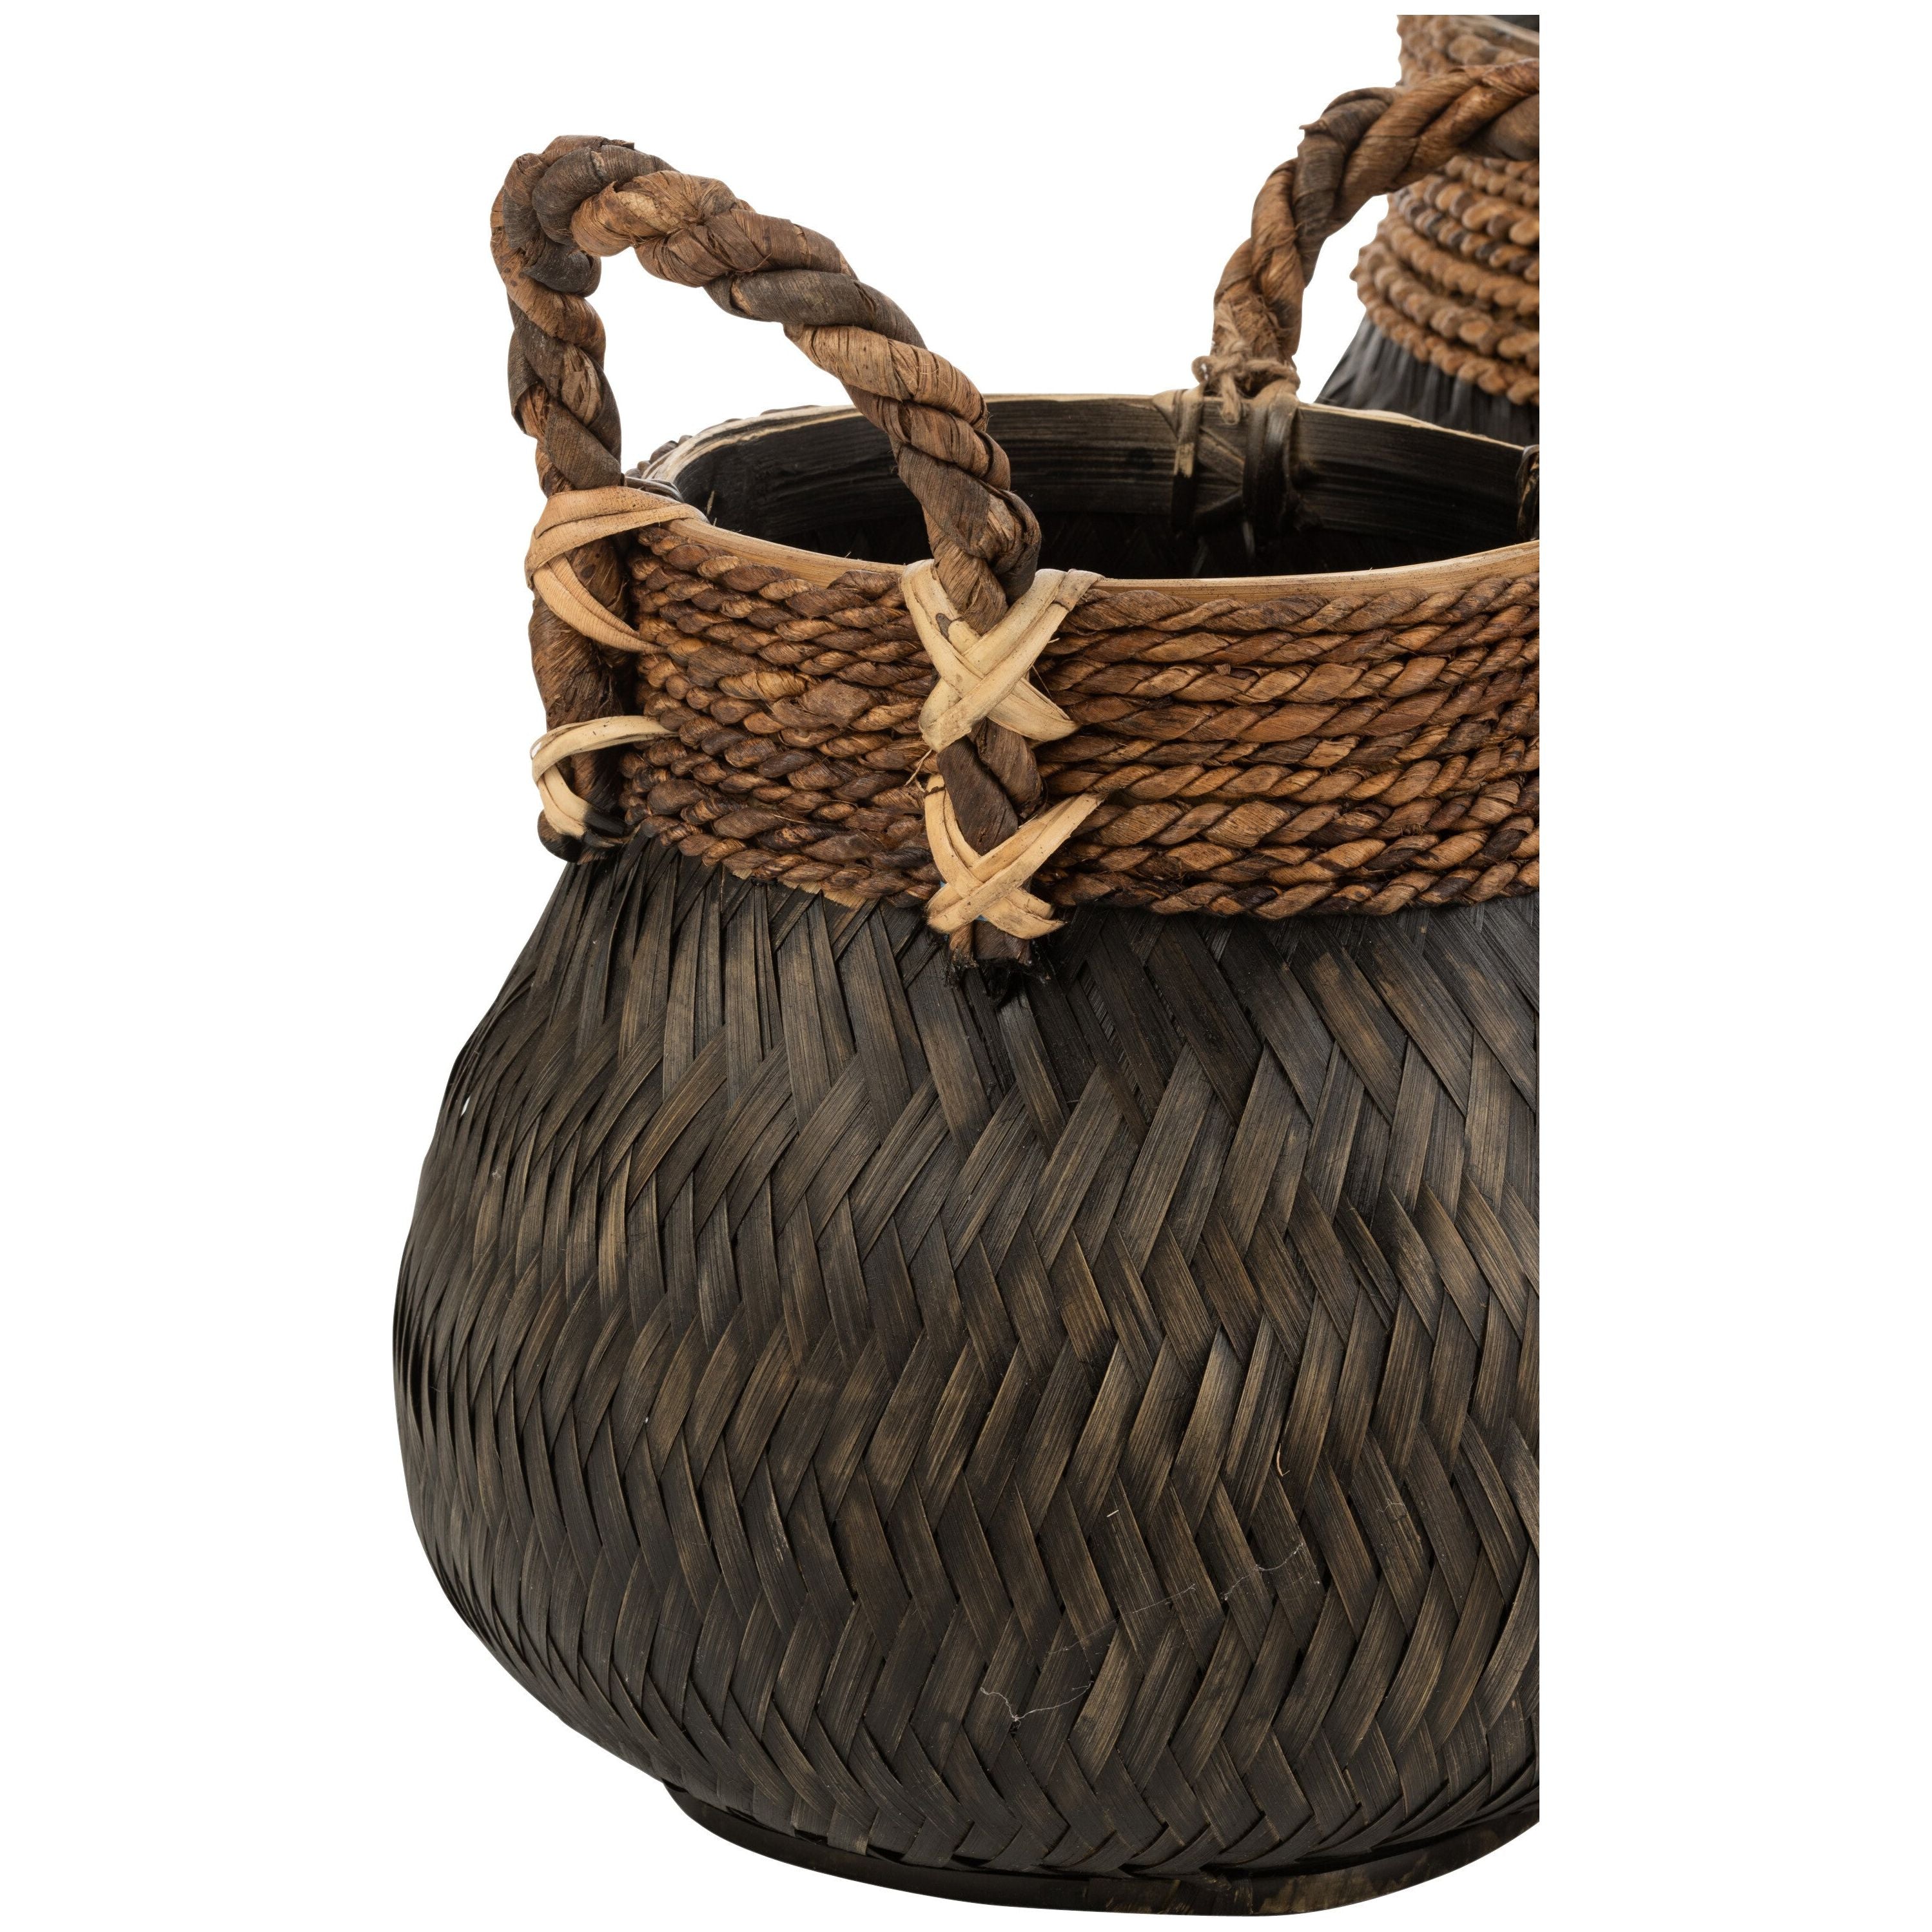 Baskets+handle Ball Bamboo+rope Black